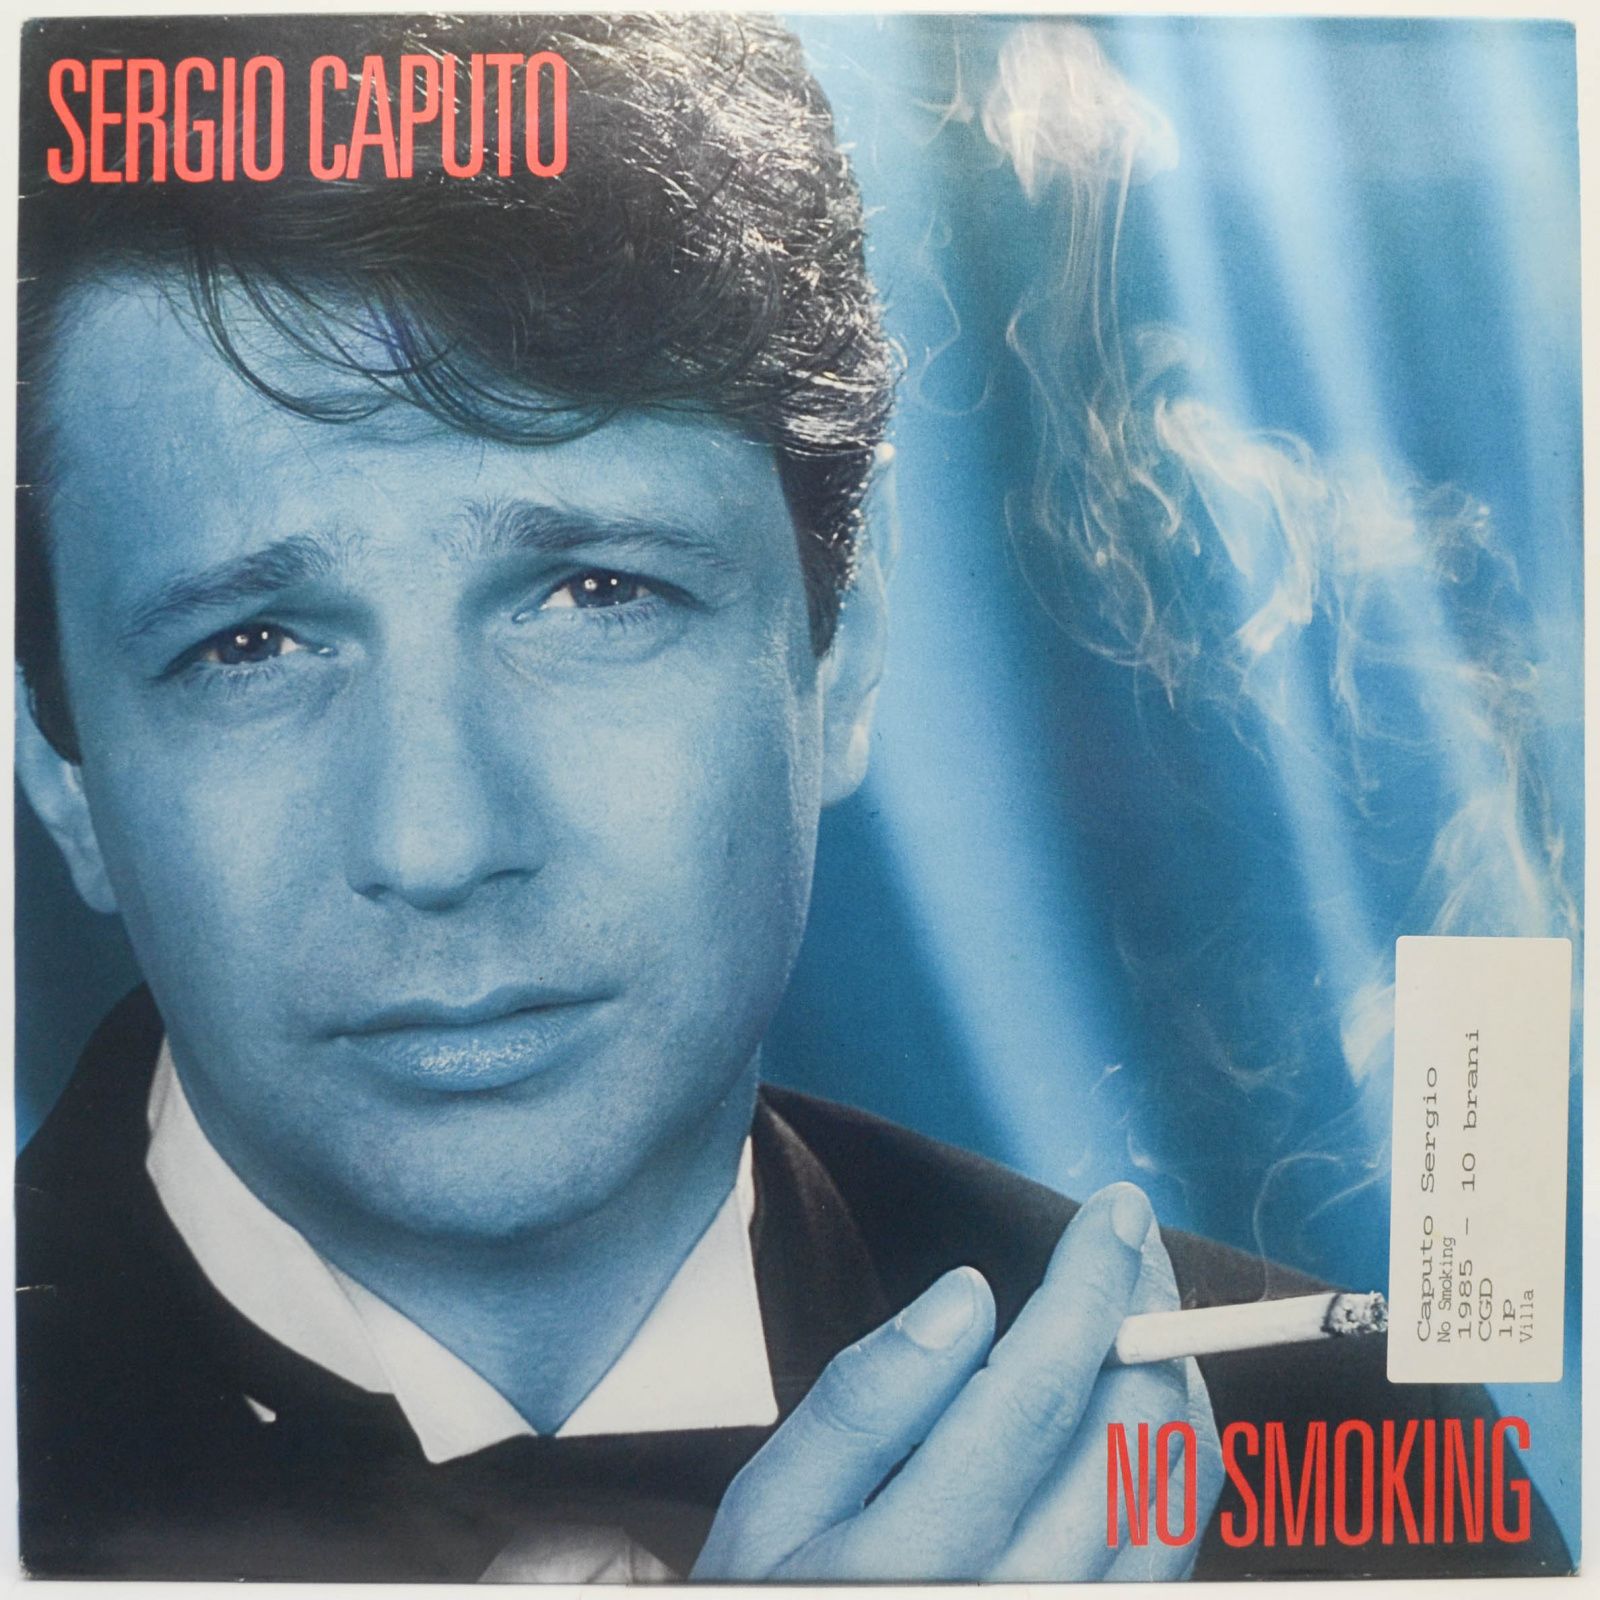 Sergio Caputo — No Smoking, 1985